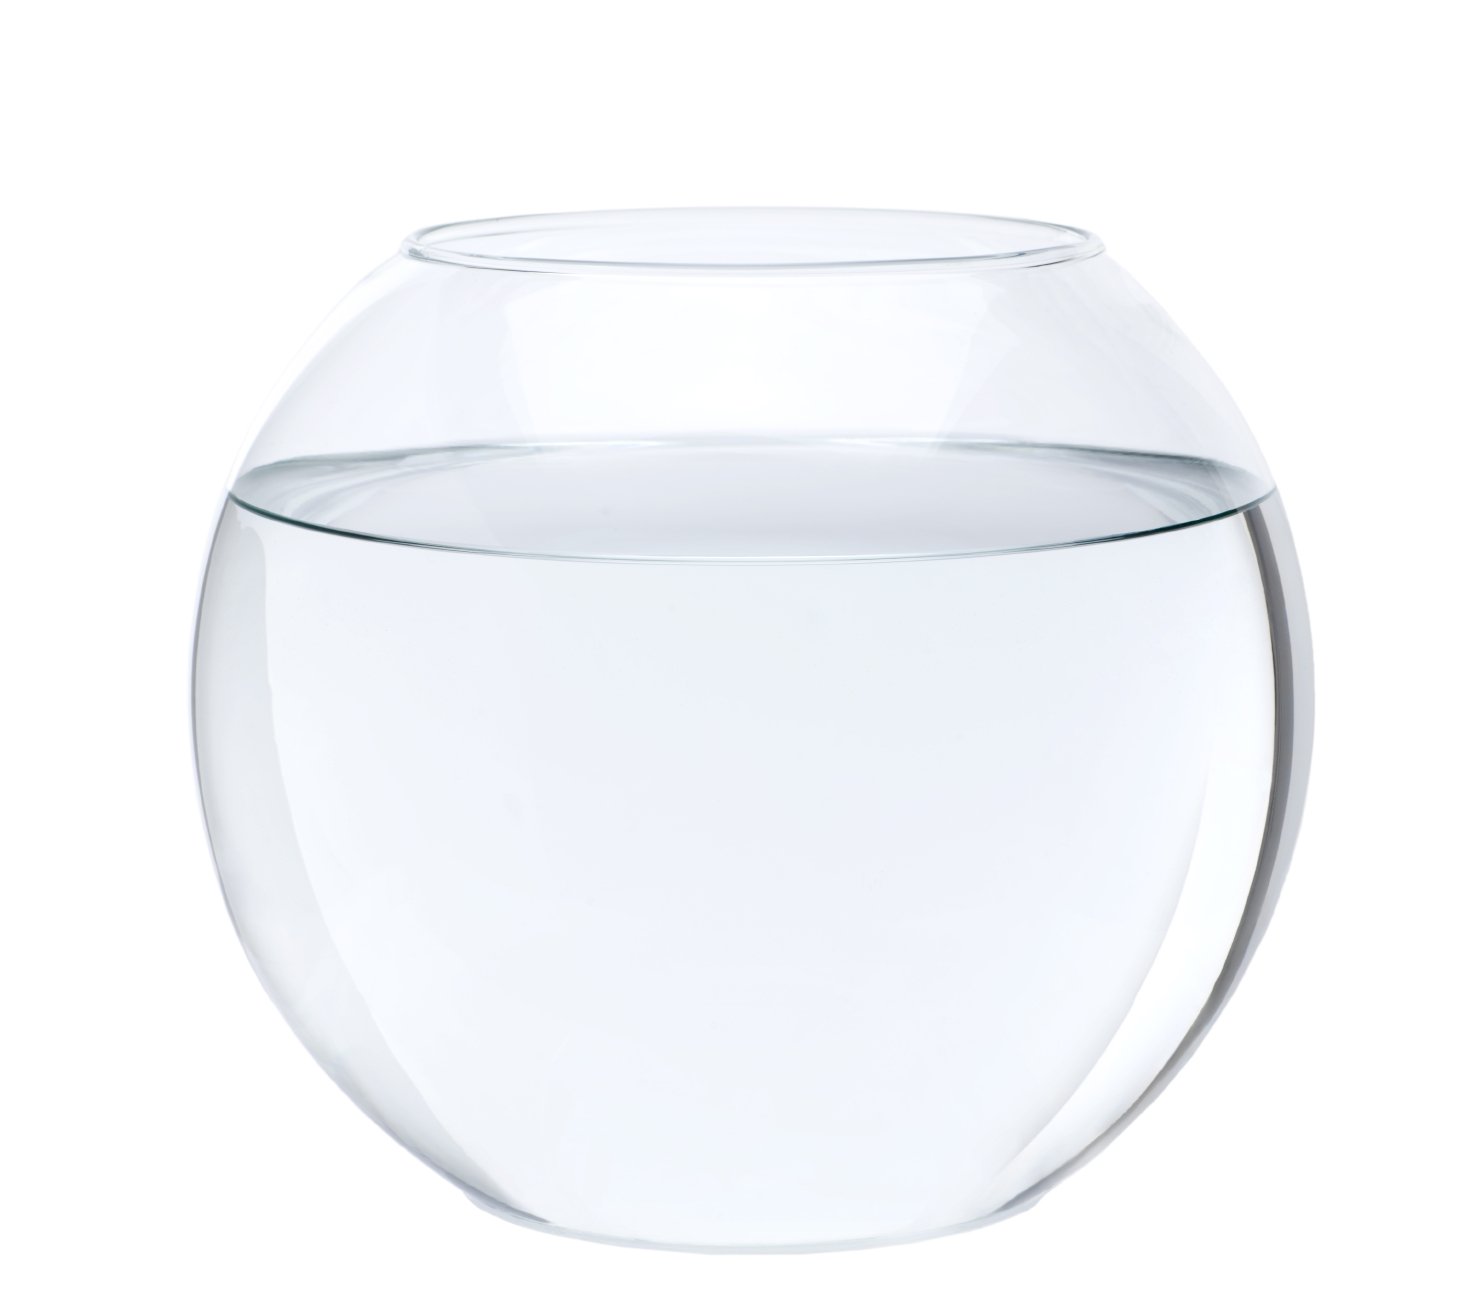 fishbowl clipart bowl water